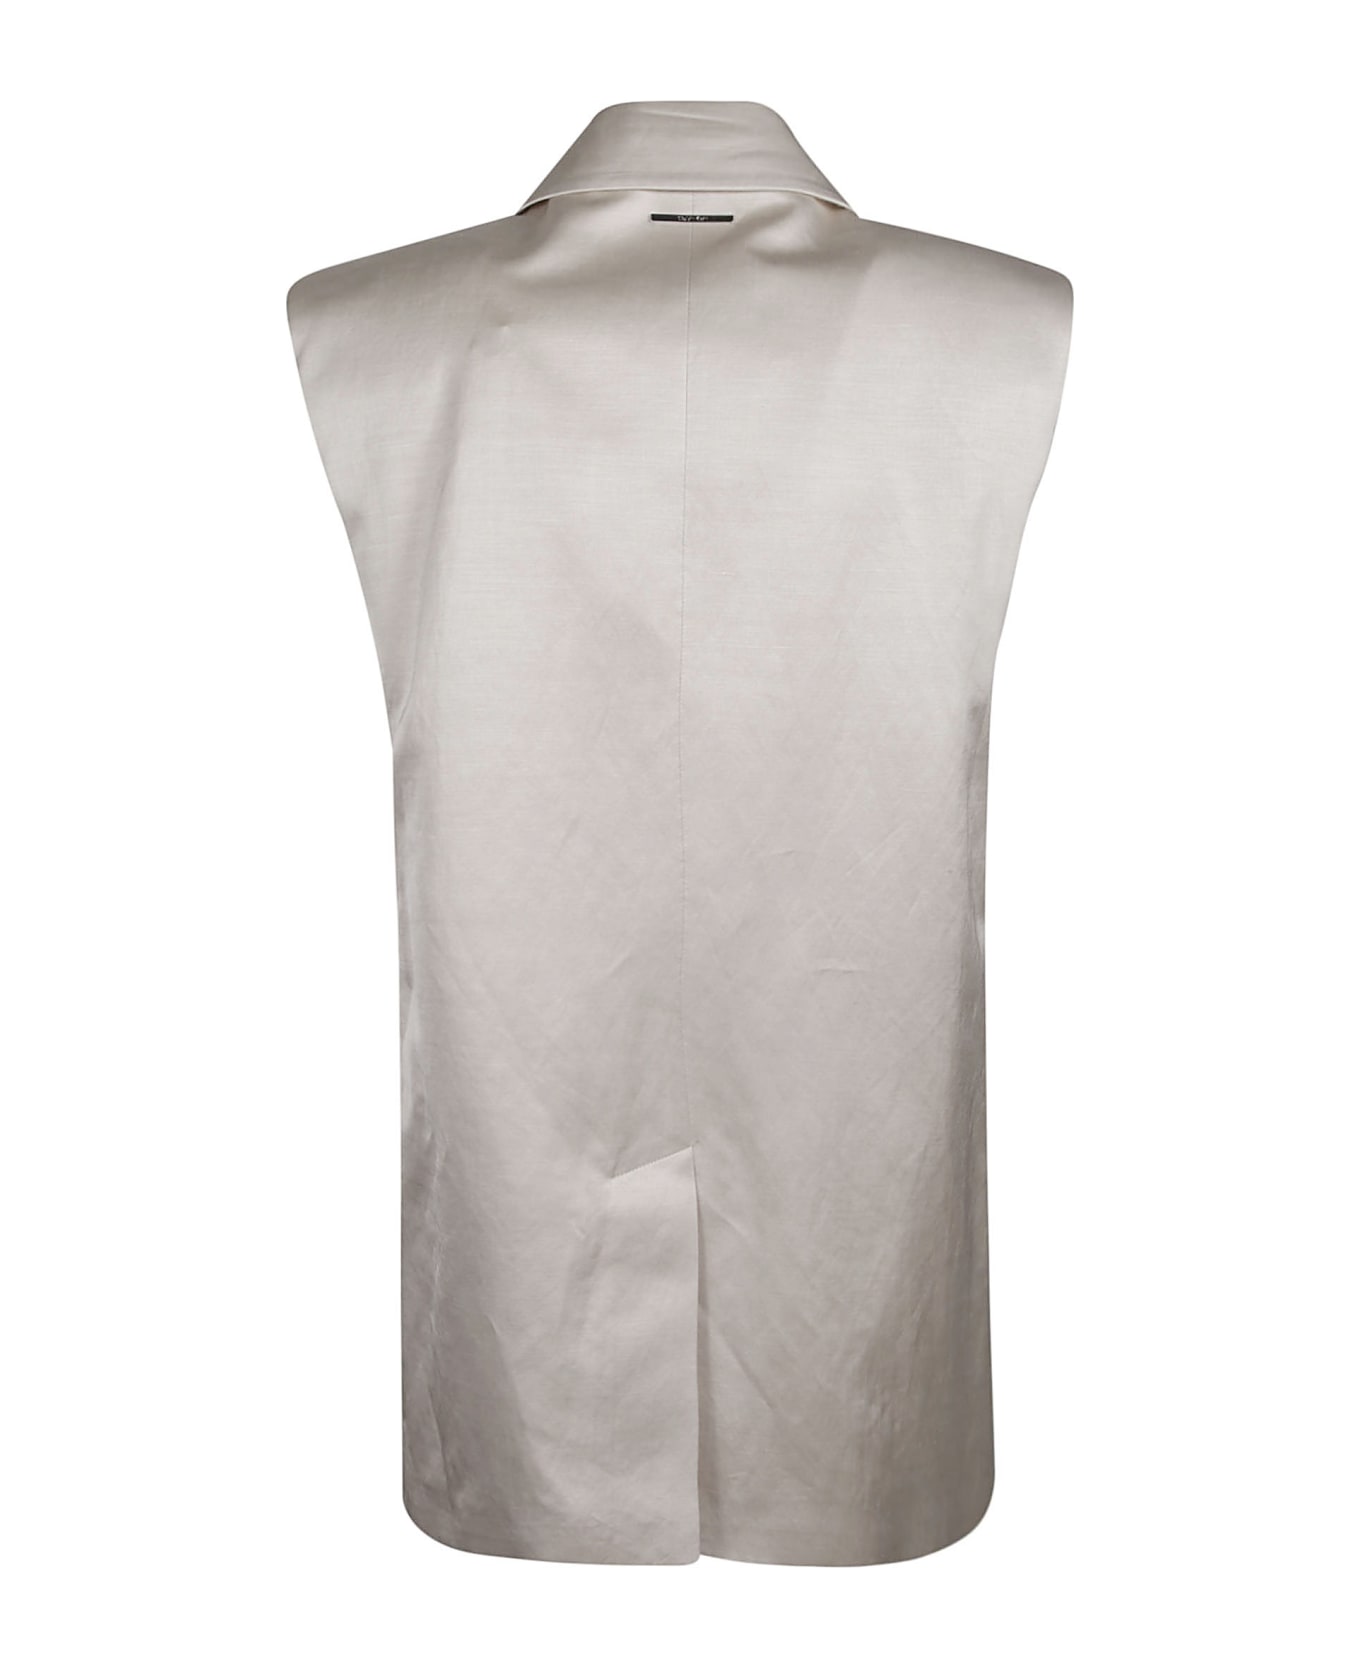 Calvin Klein Shiny Viscose Tailored Vest - Pearl Grey